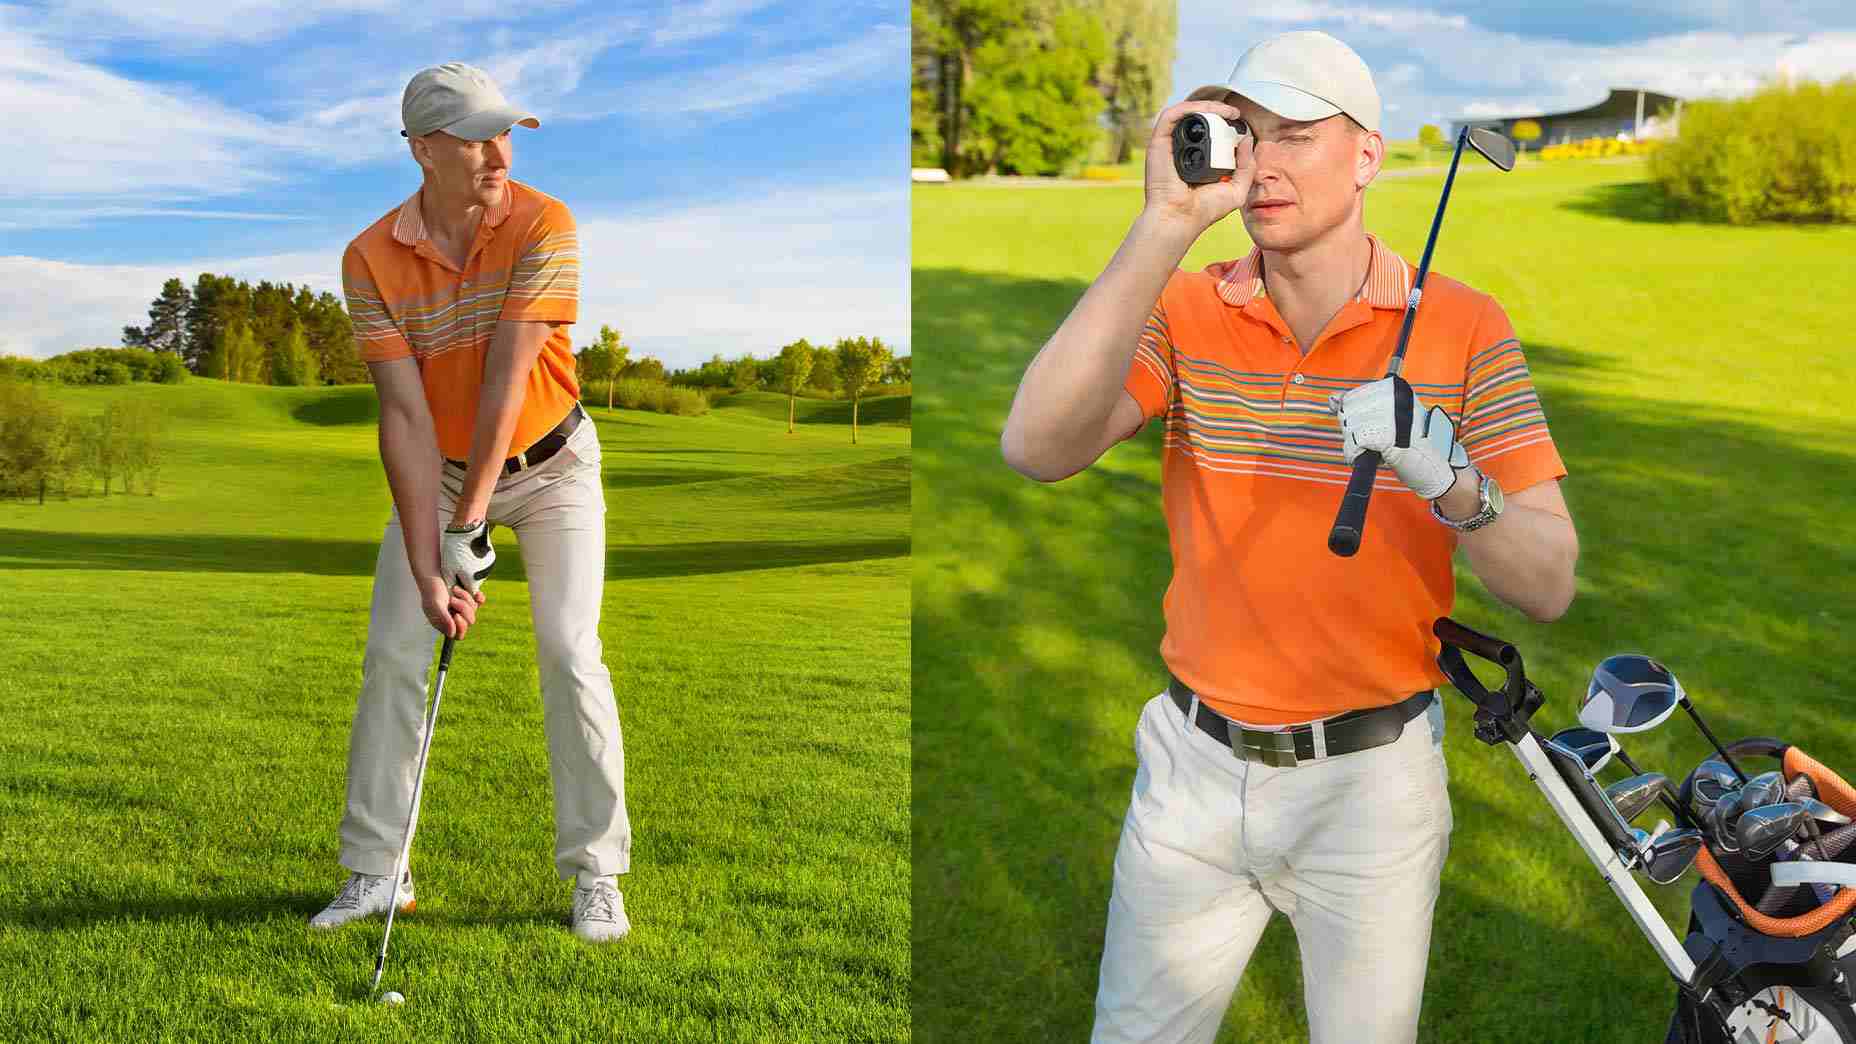 Golf rangefinders under $200: Our top 4 picks